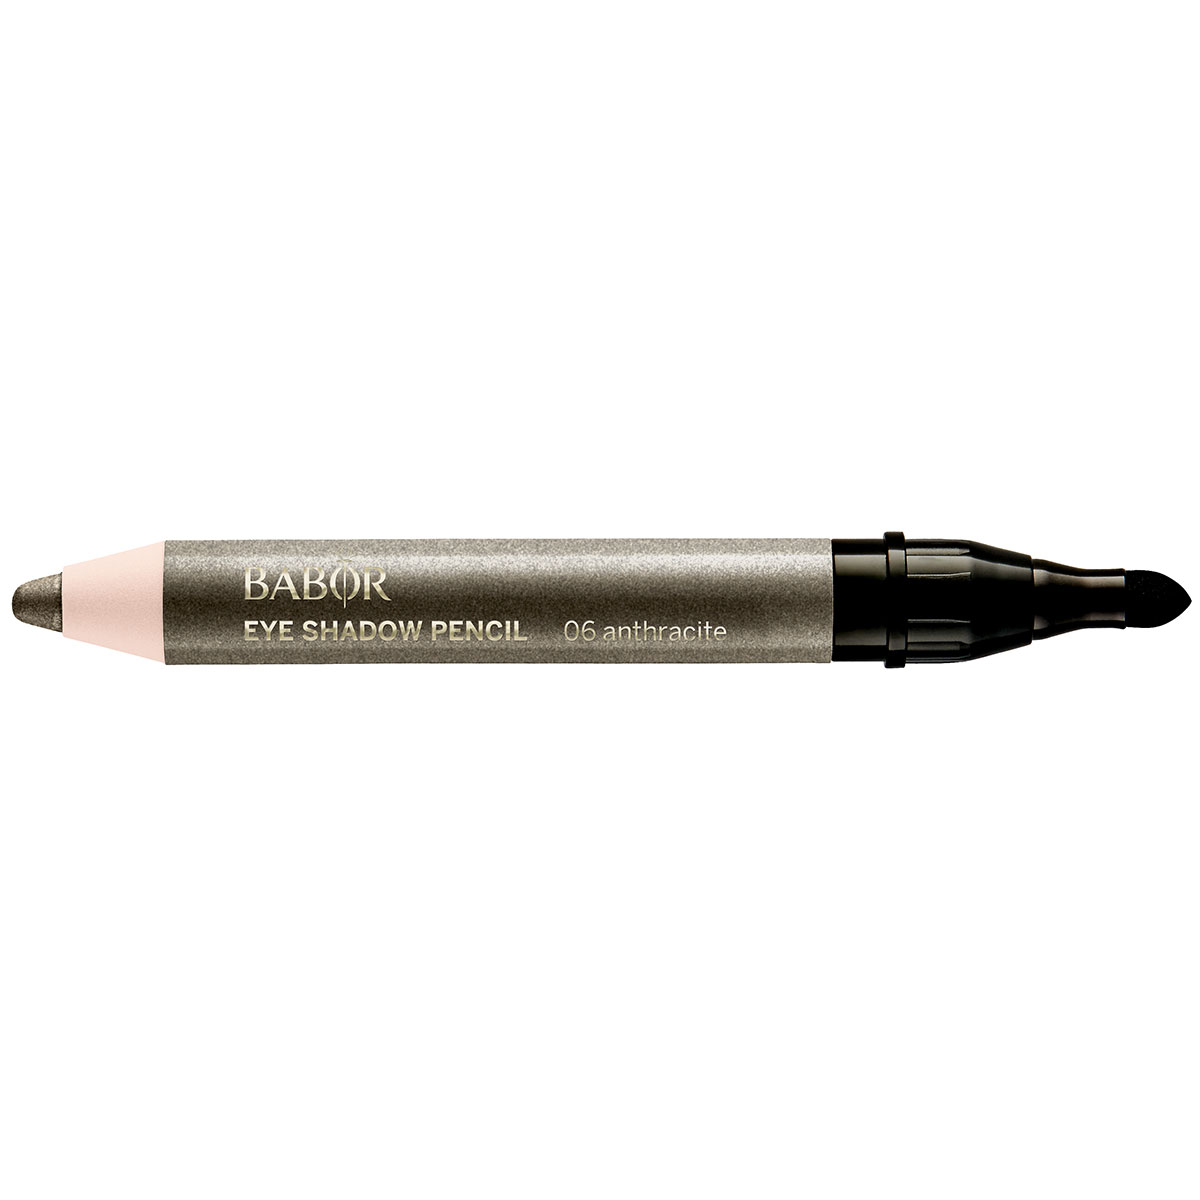 Тени-Стик для Век, тон 06 антрацит/Eye Shadow Pencil, 06 anthracite BABOR